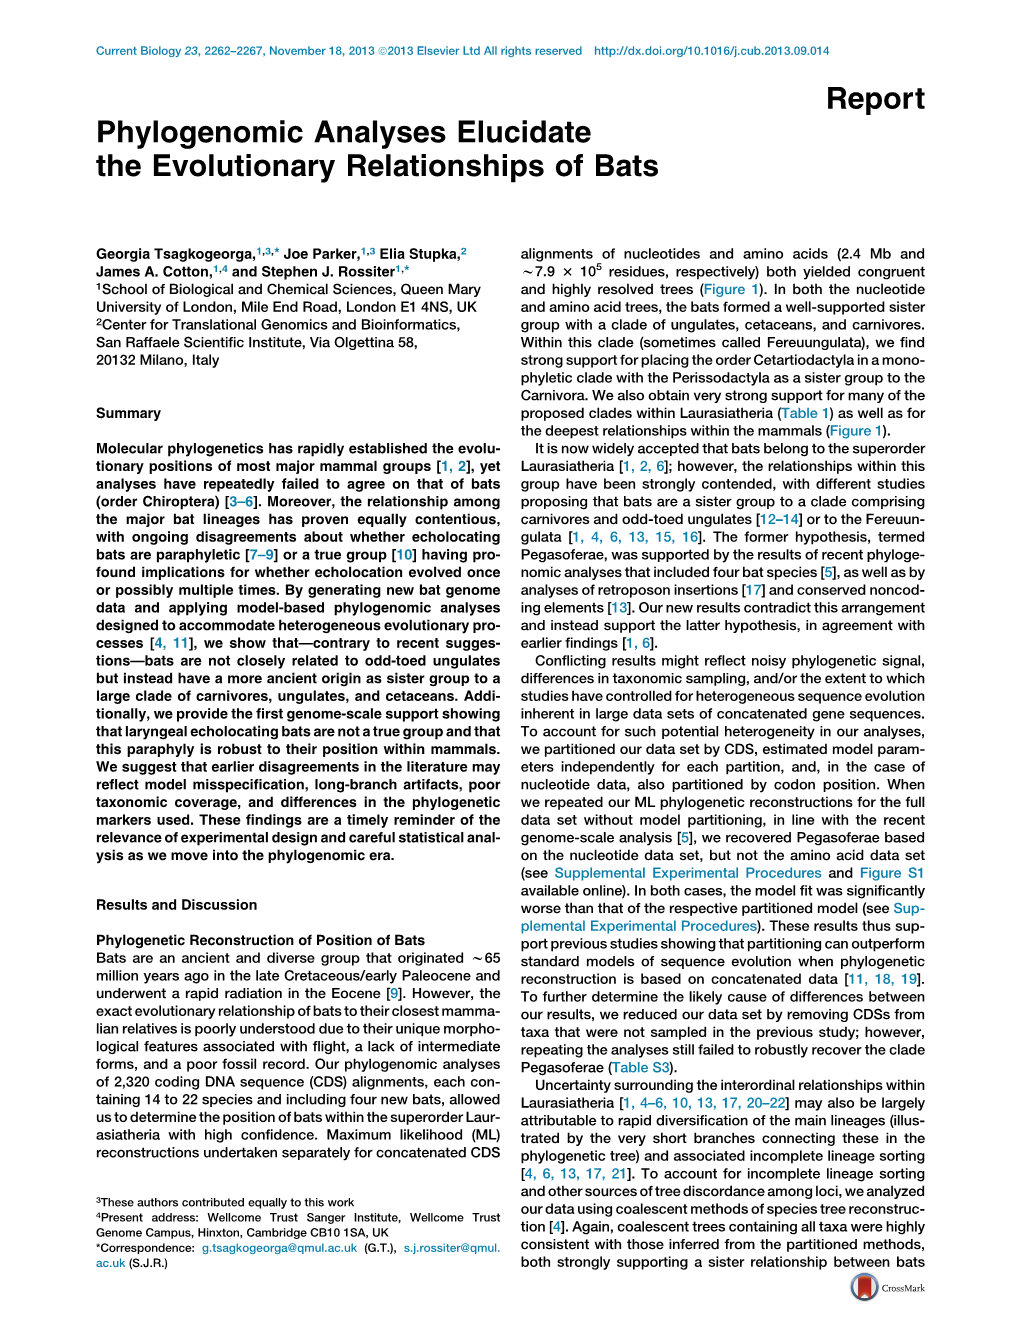 Report Phylogenomic Analyses Elucidate the Evolutionary Relationships of Bats